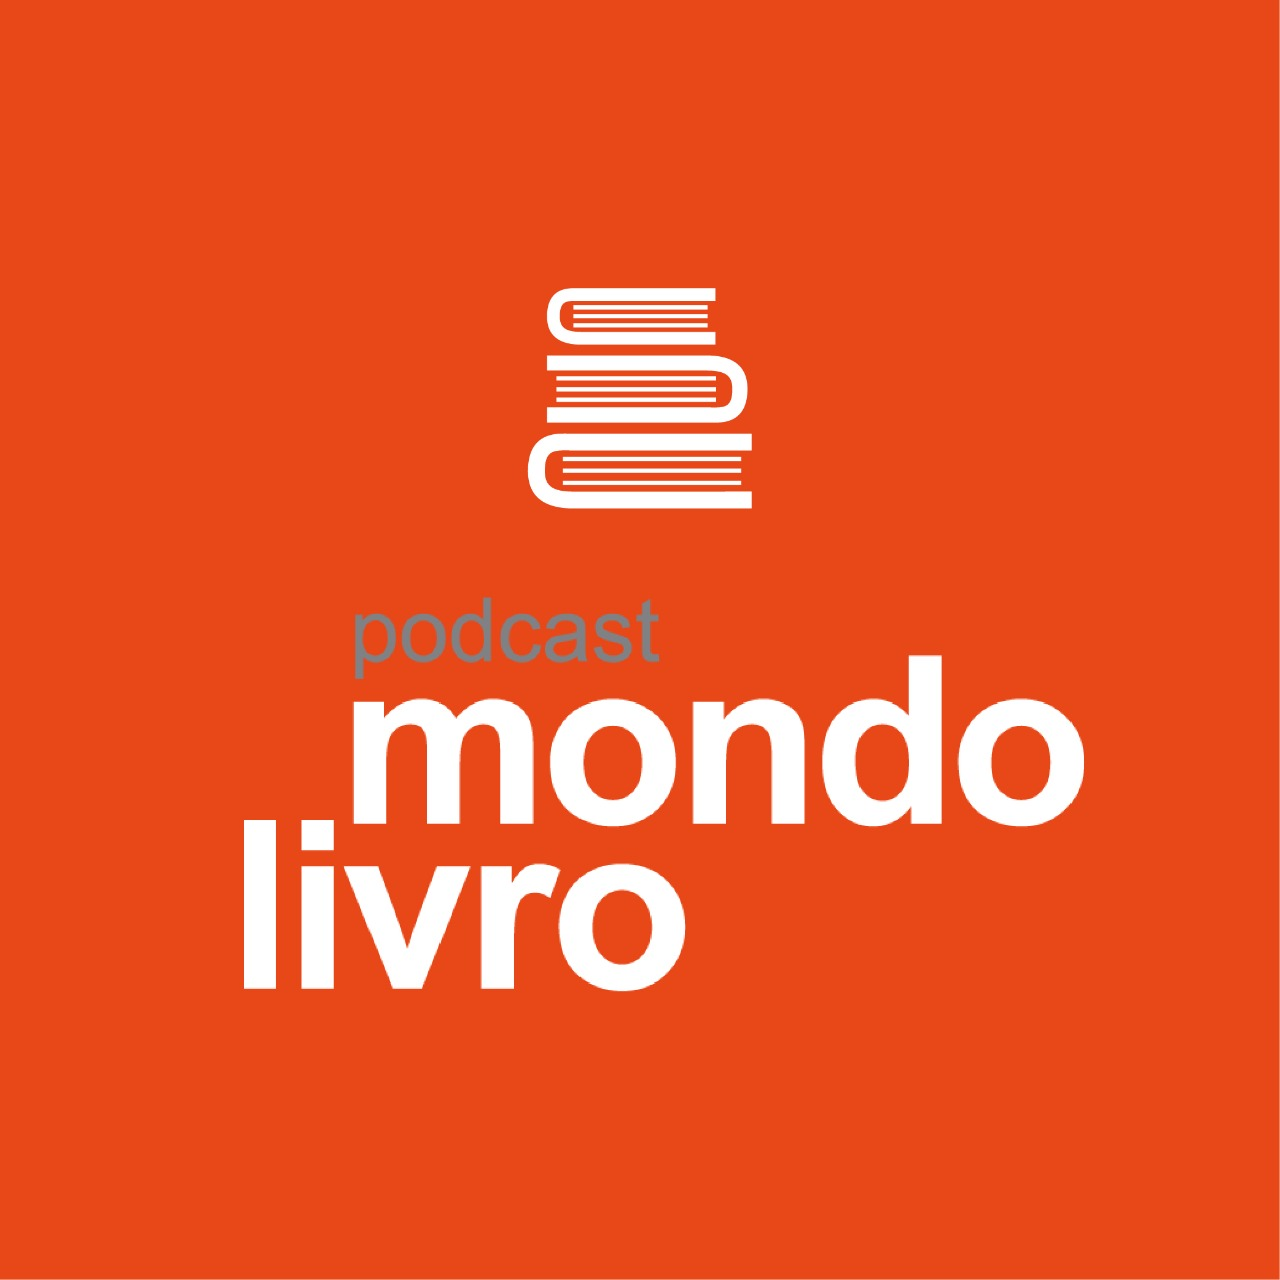 Mondolivro Podcast - Podcast com Ana Miranda